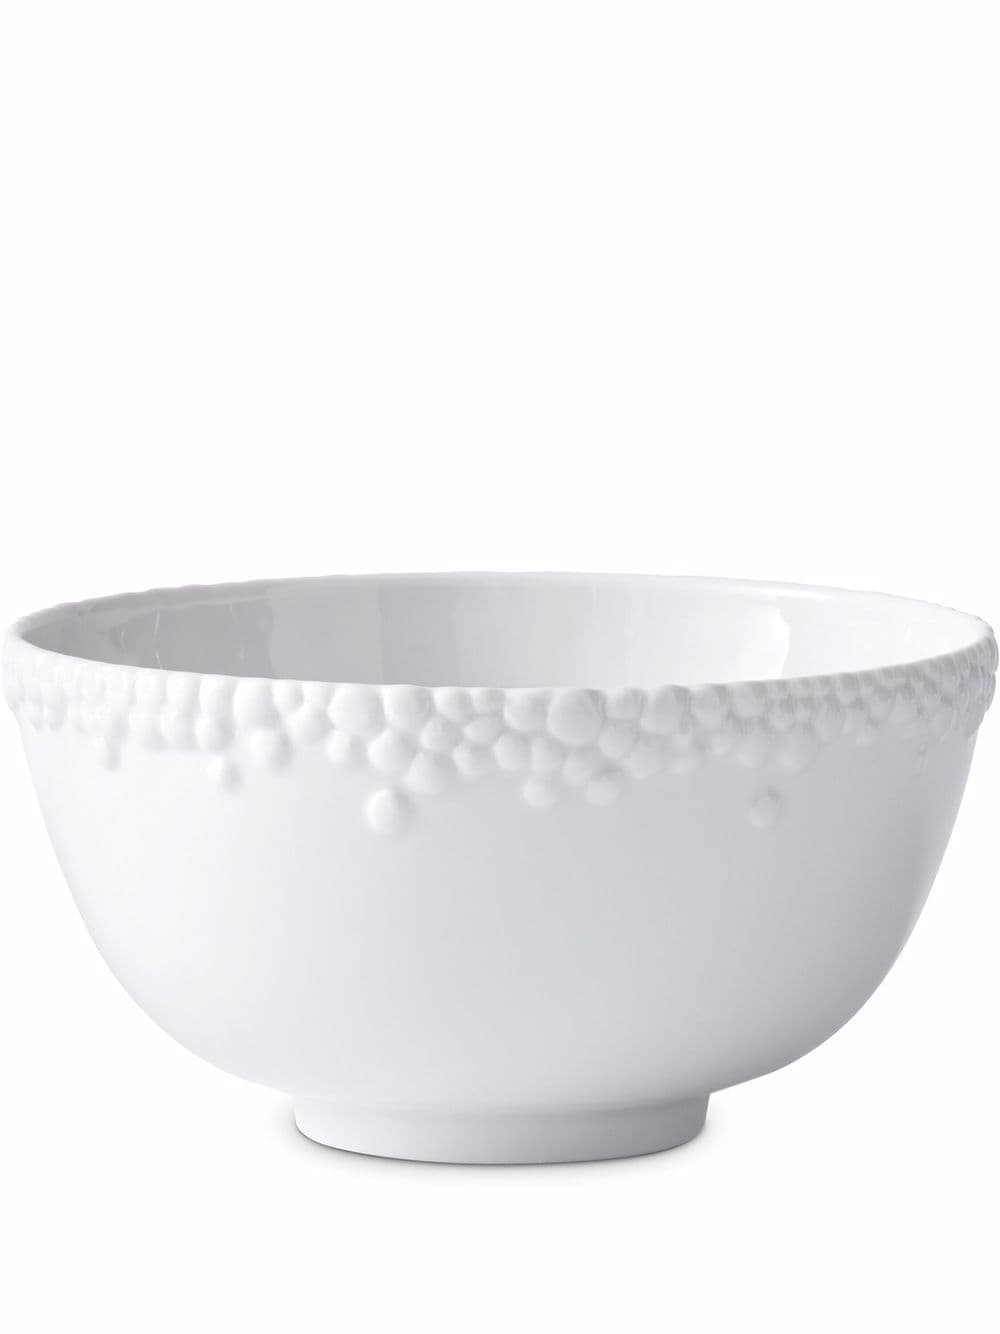 L'Objet Haas Mojave cereal bowl - White von L'Objet